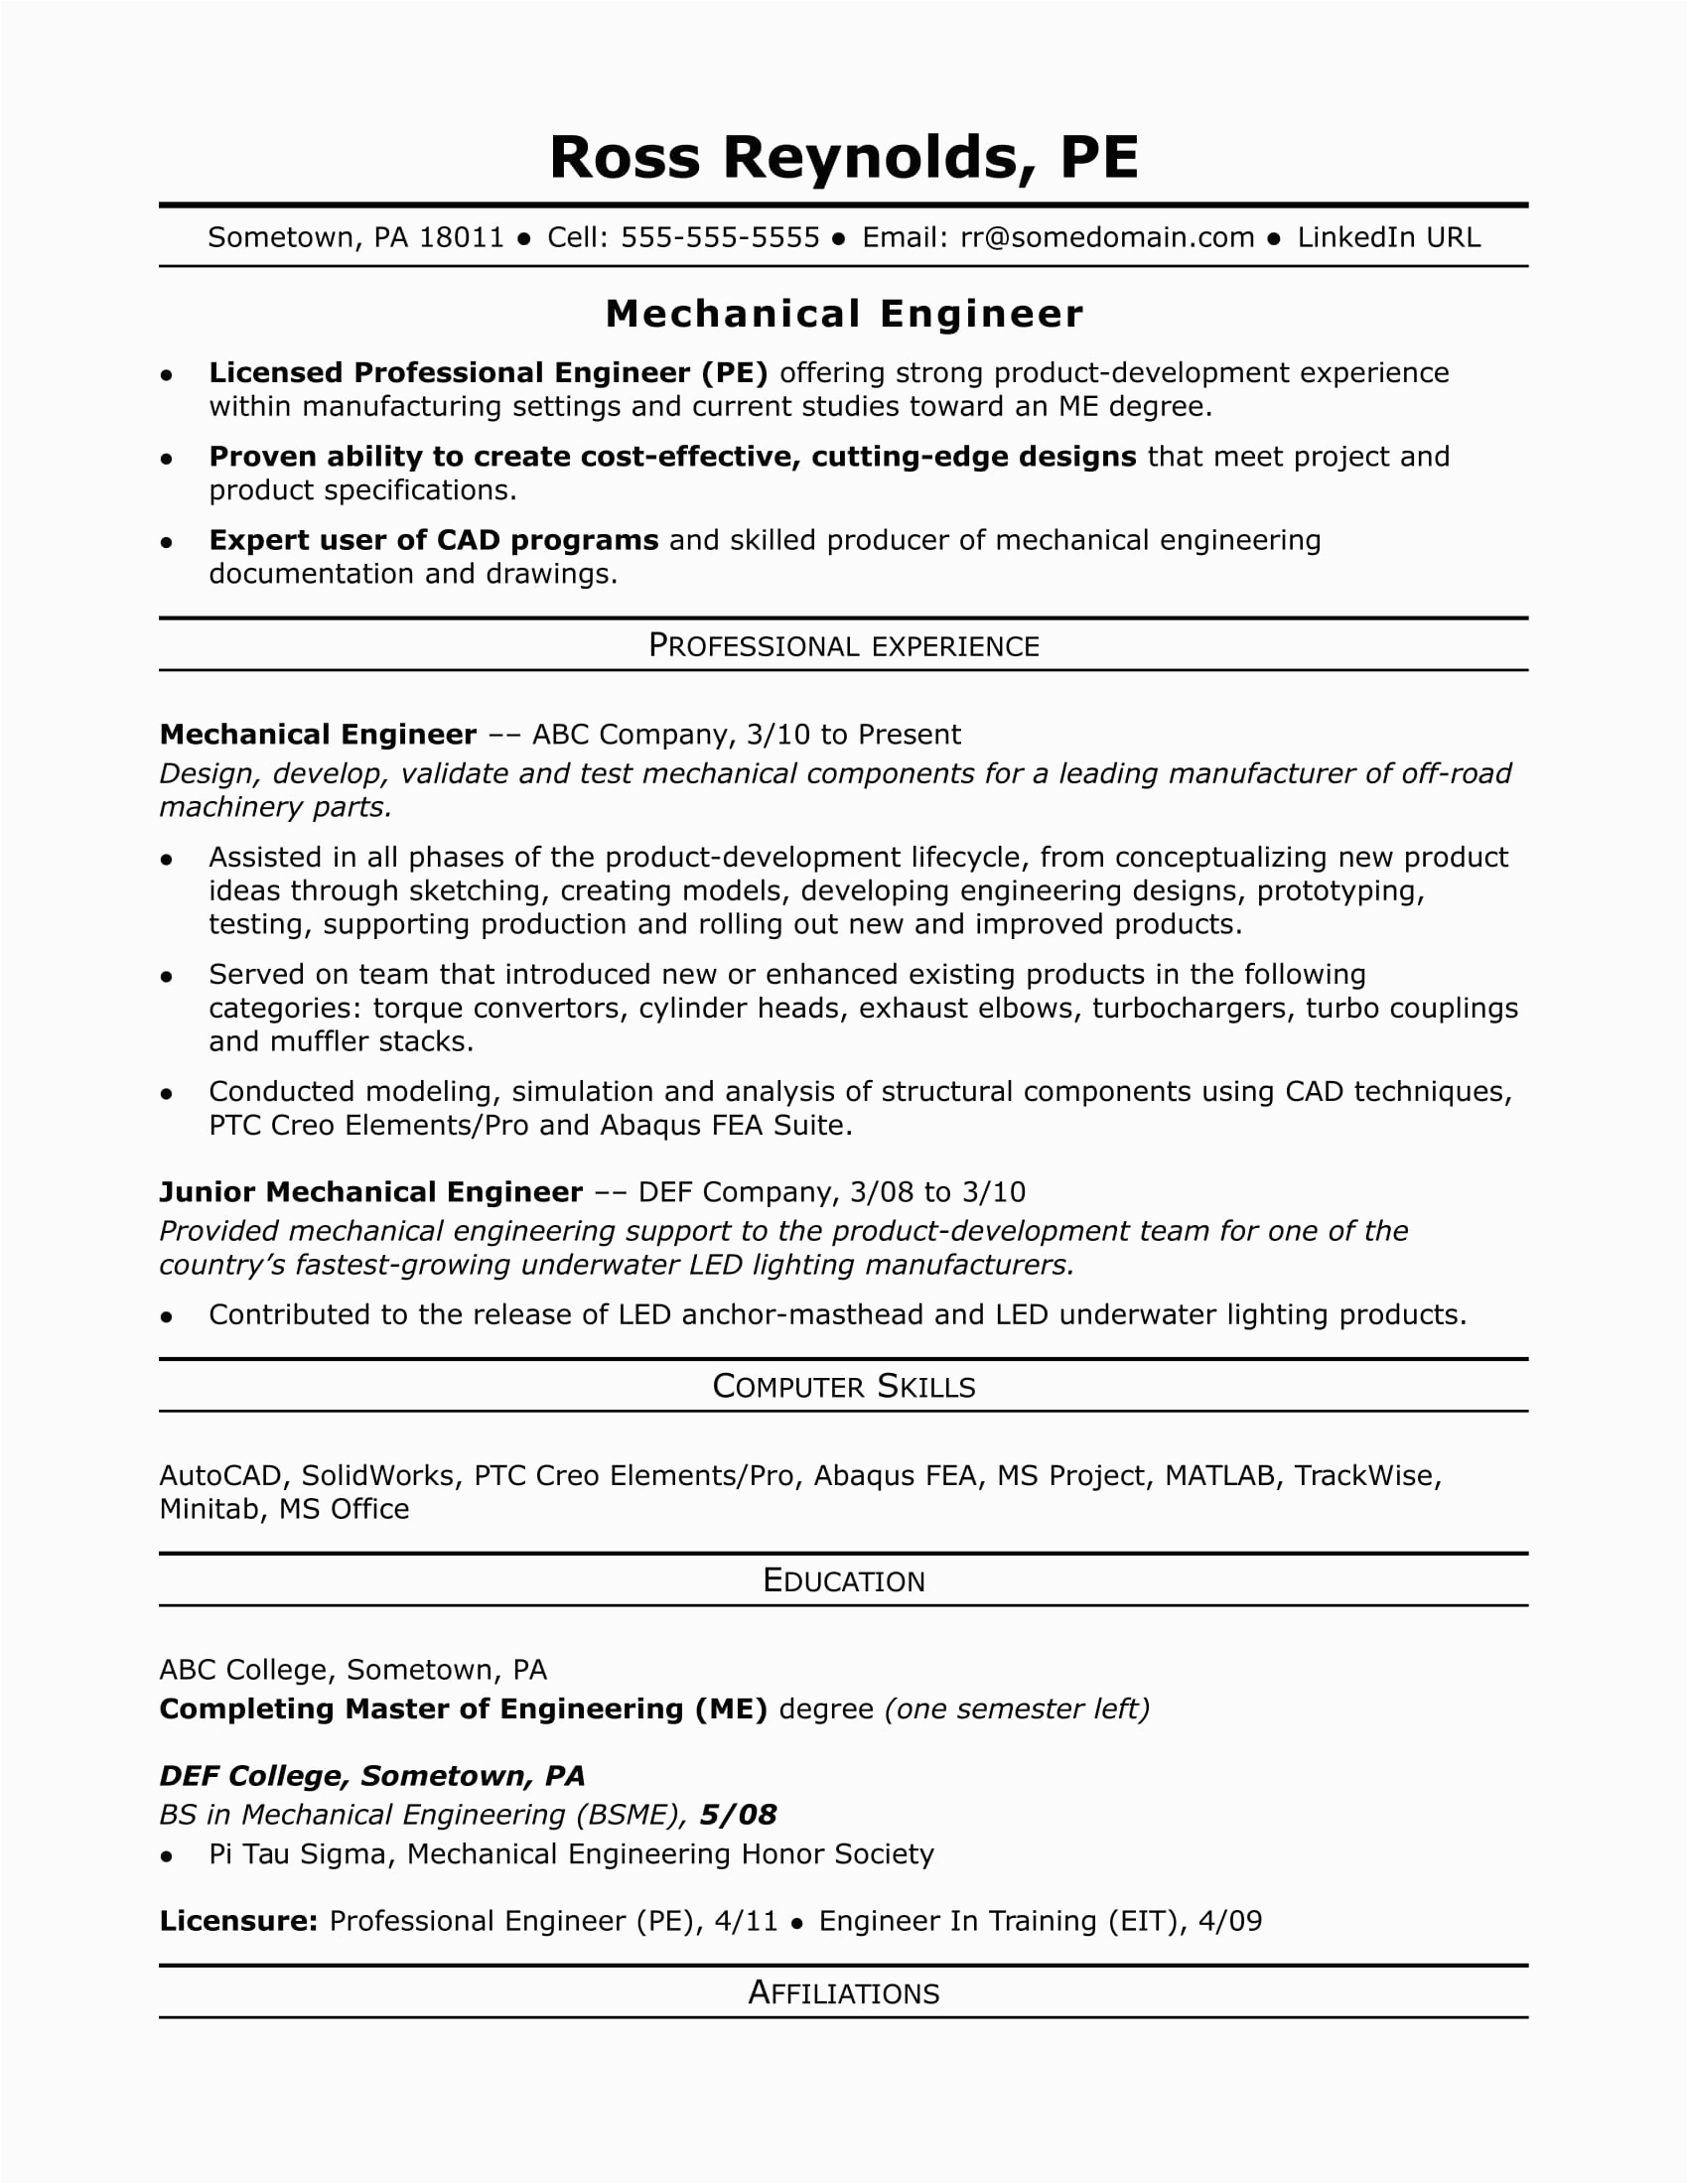 Sample Resume format for Mechanical Engineer Sample Resume for A Midlevel Mechanical Engineer